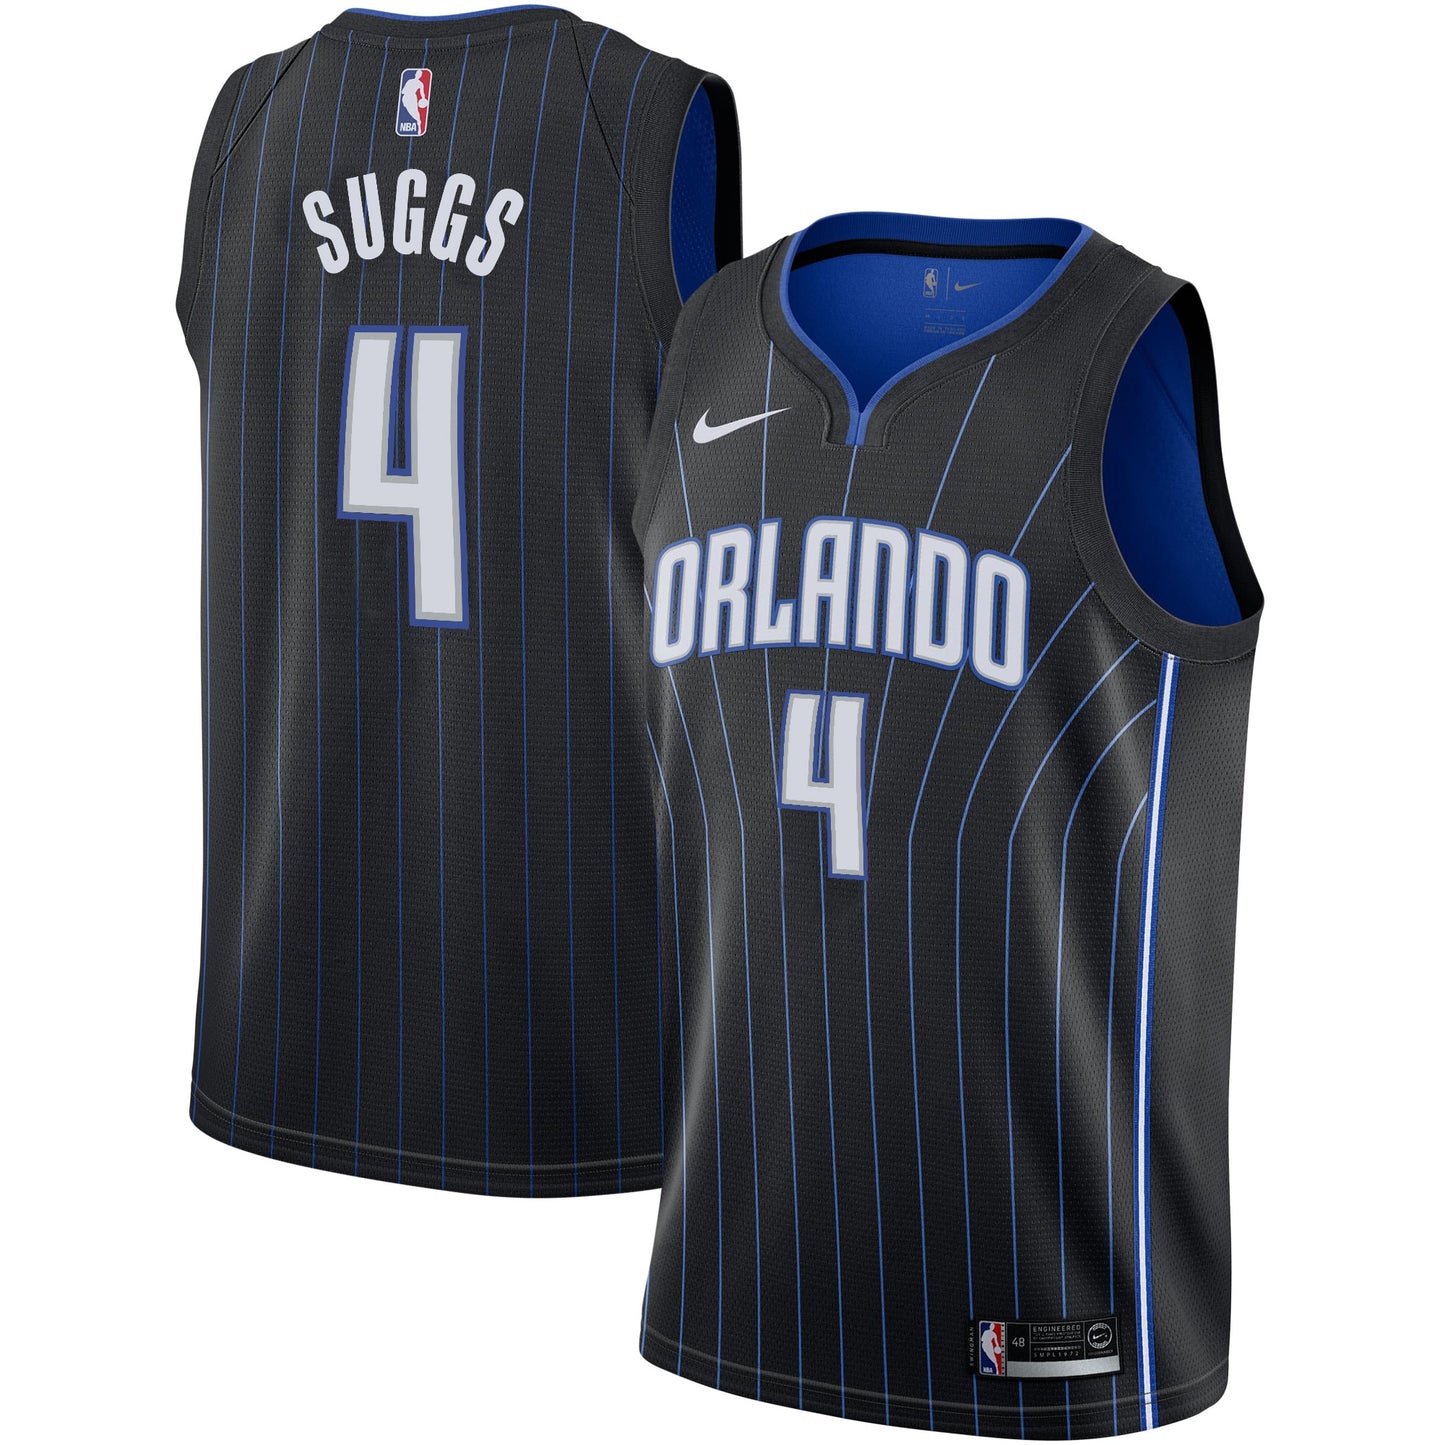 Jalen Suggs Orlando Magic Nike NBA Draft First Round Pick Swingman Jersey Black - Icon Edition